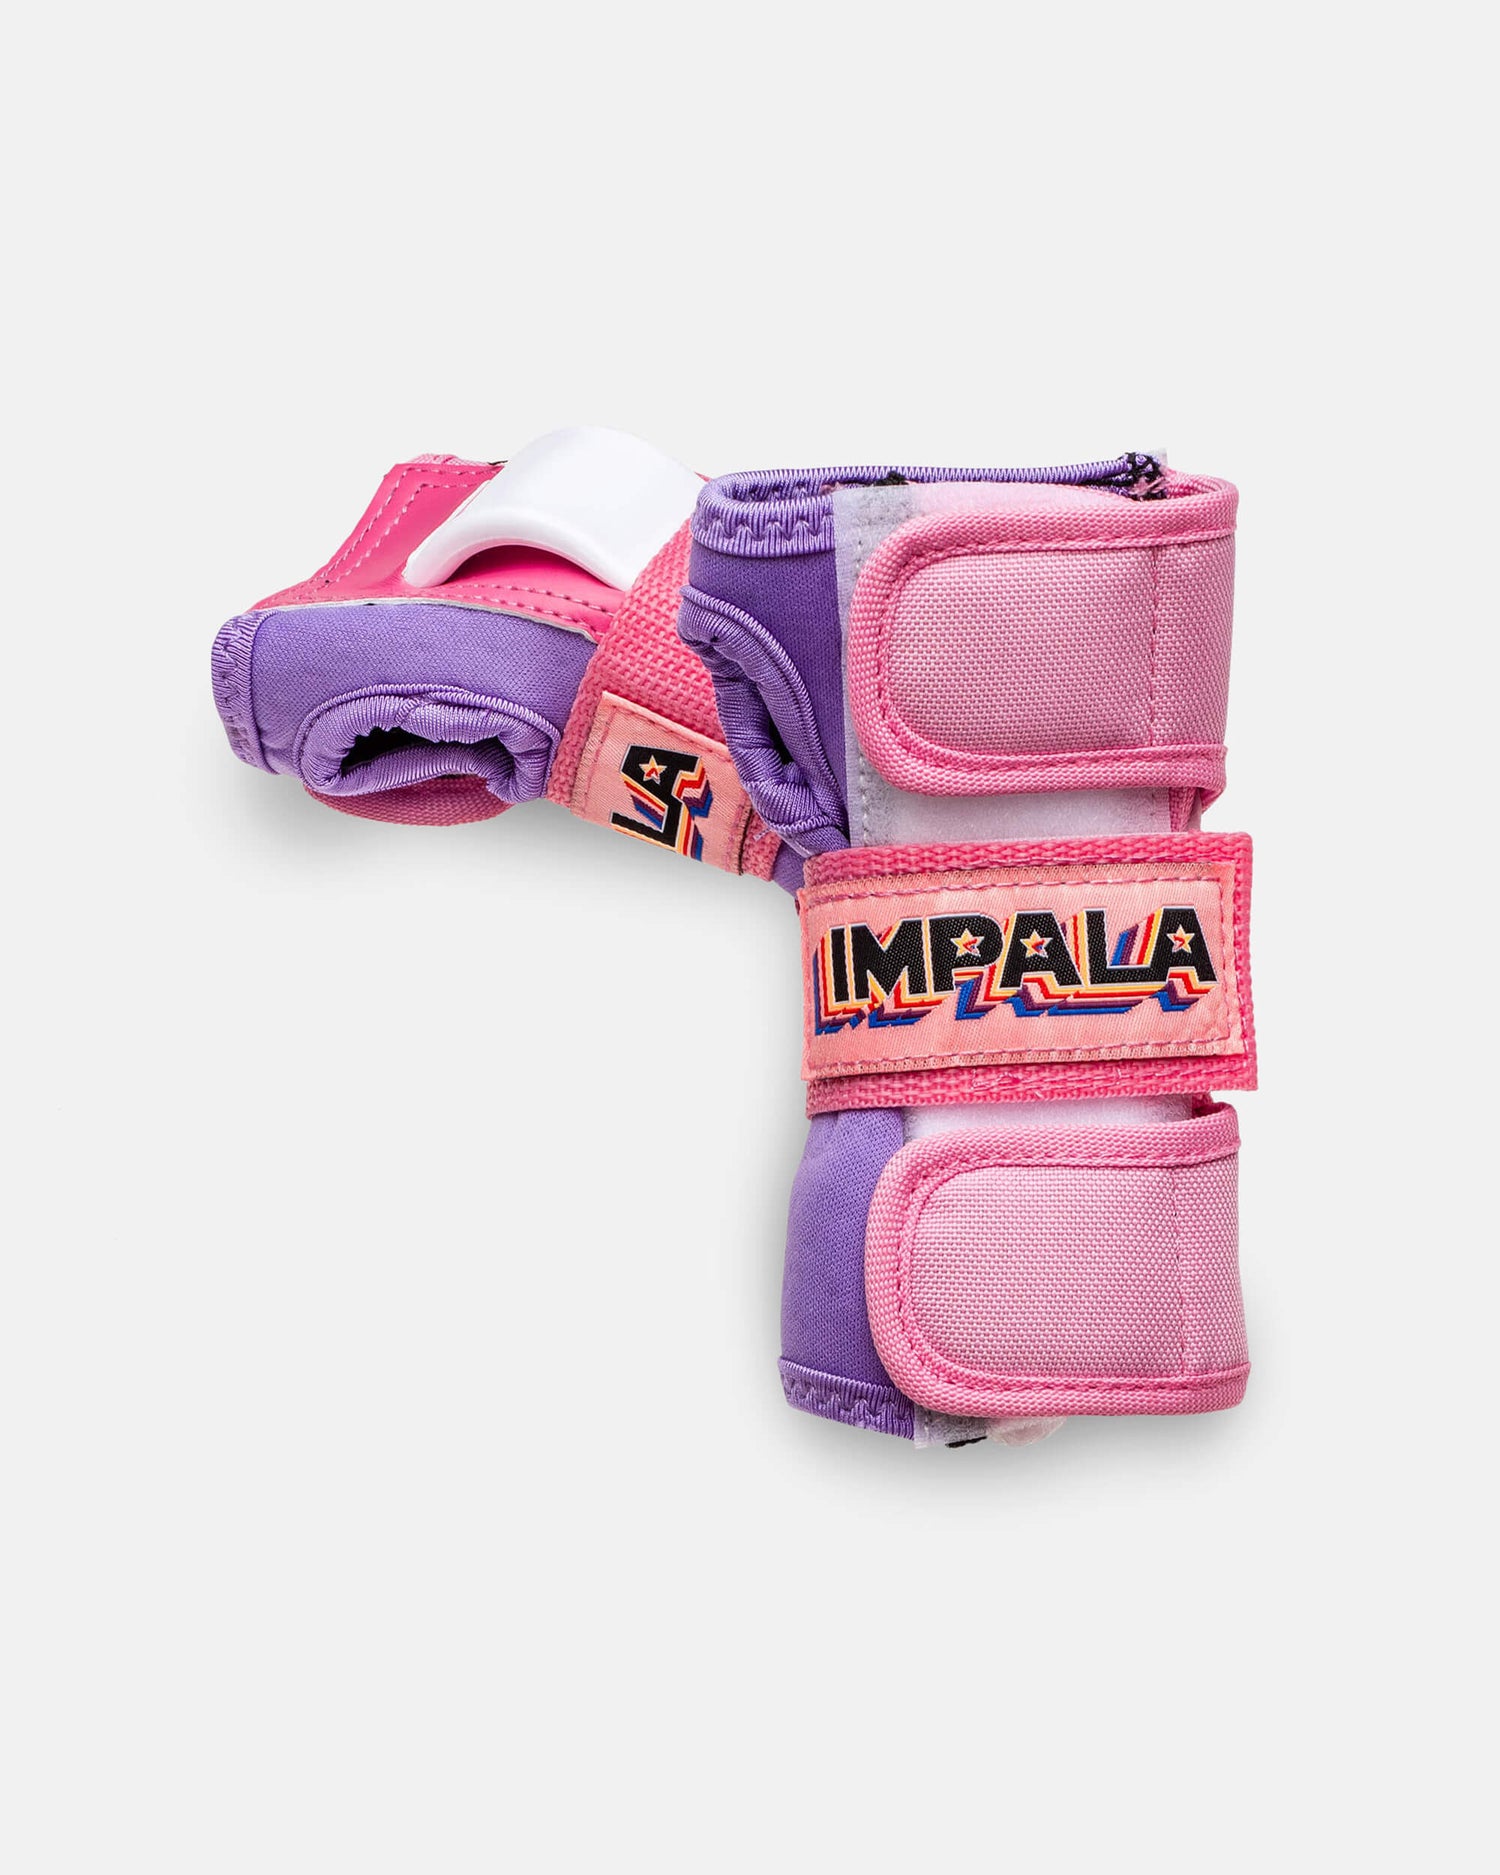 Impala Kinder Schutzausrüstung Pack - Pink